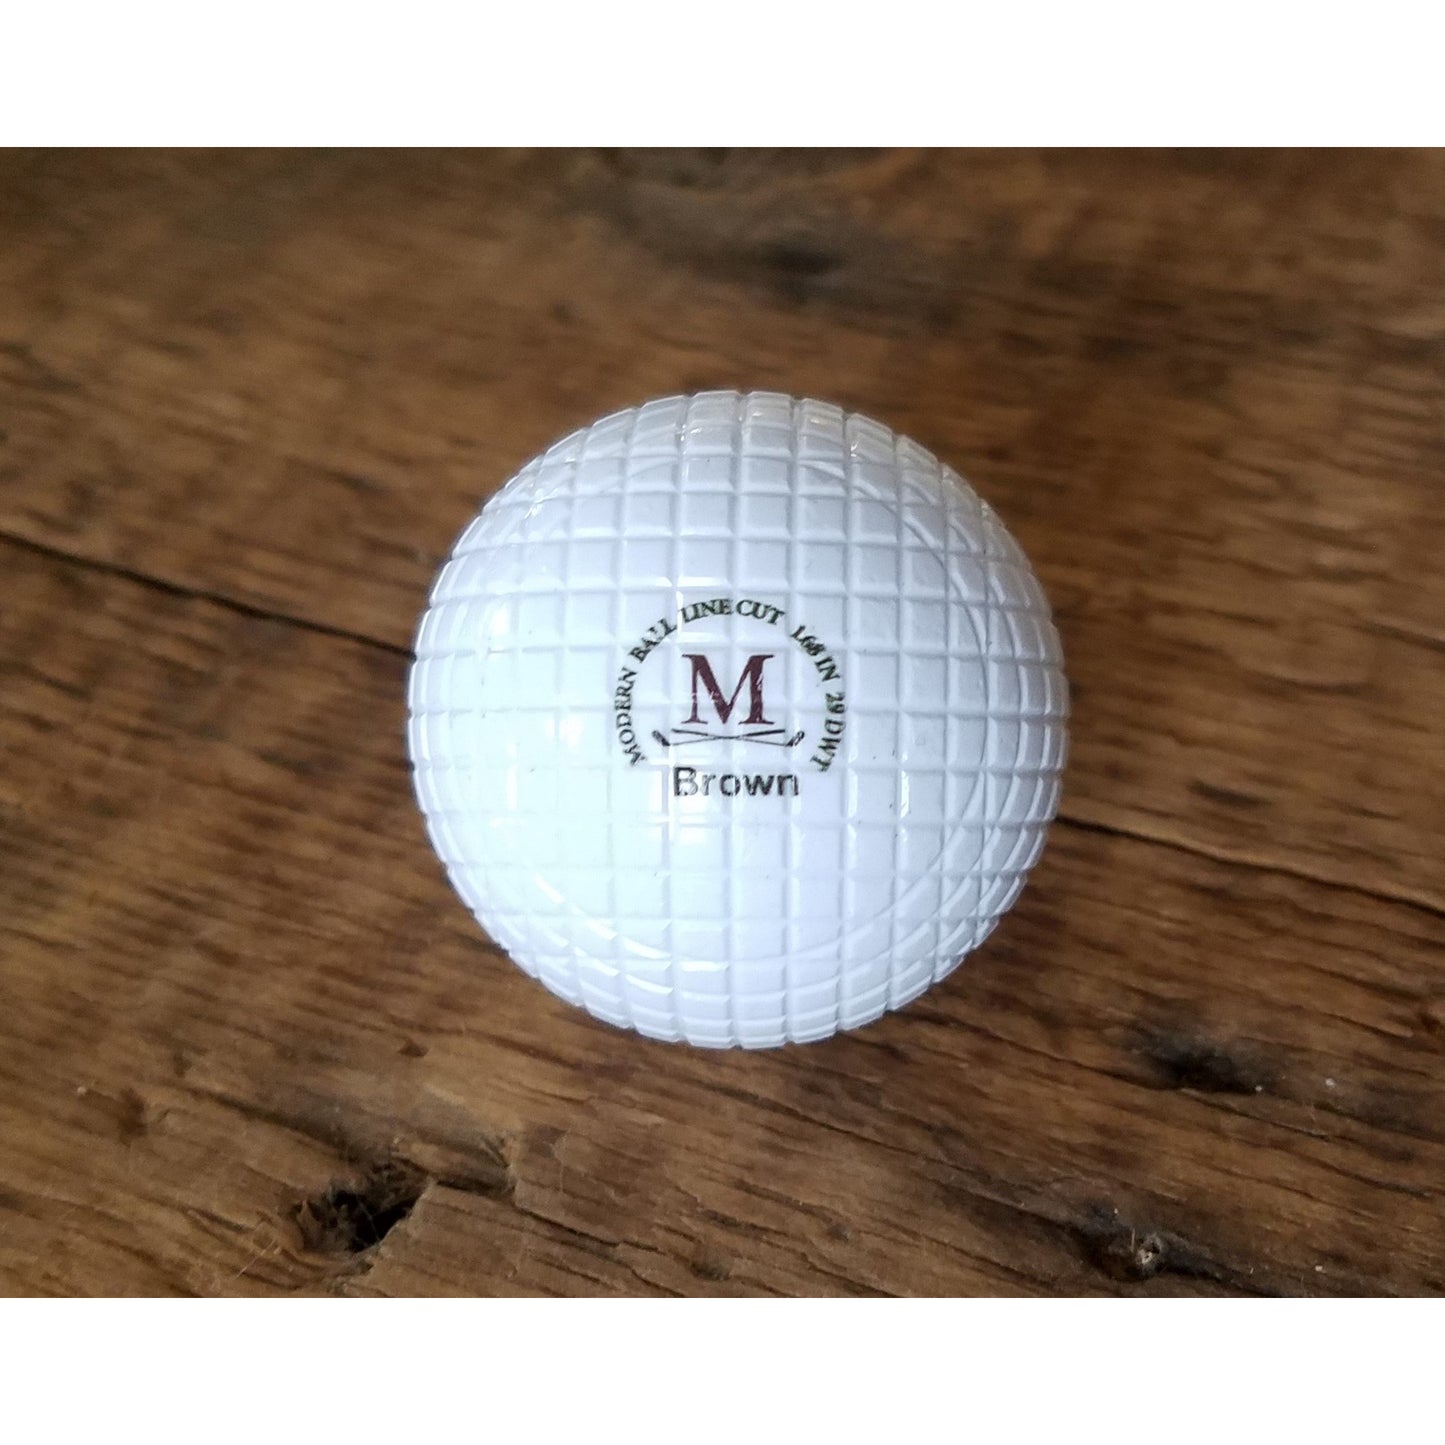 McIntyre - The "Brown" single golf ball